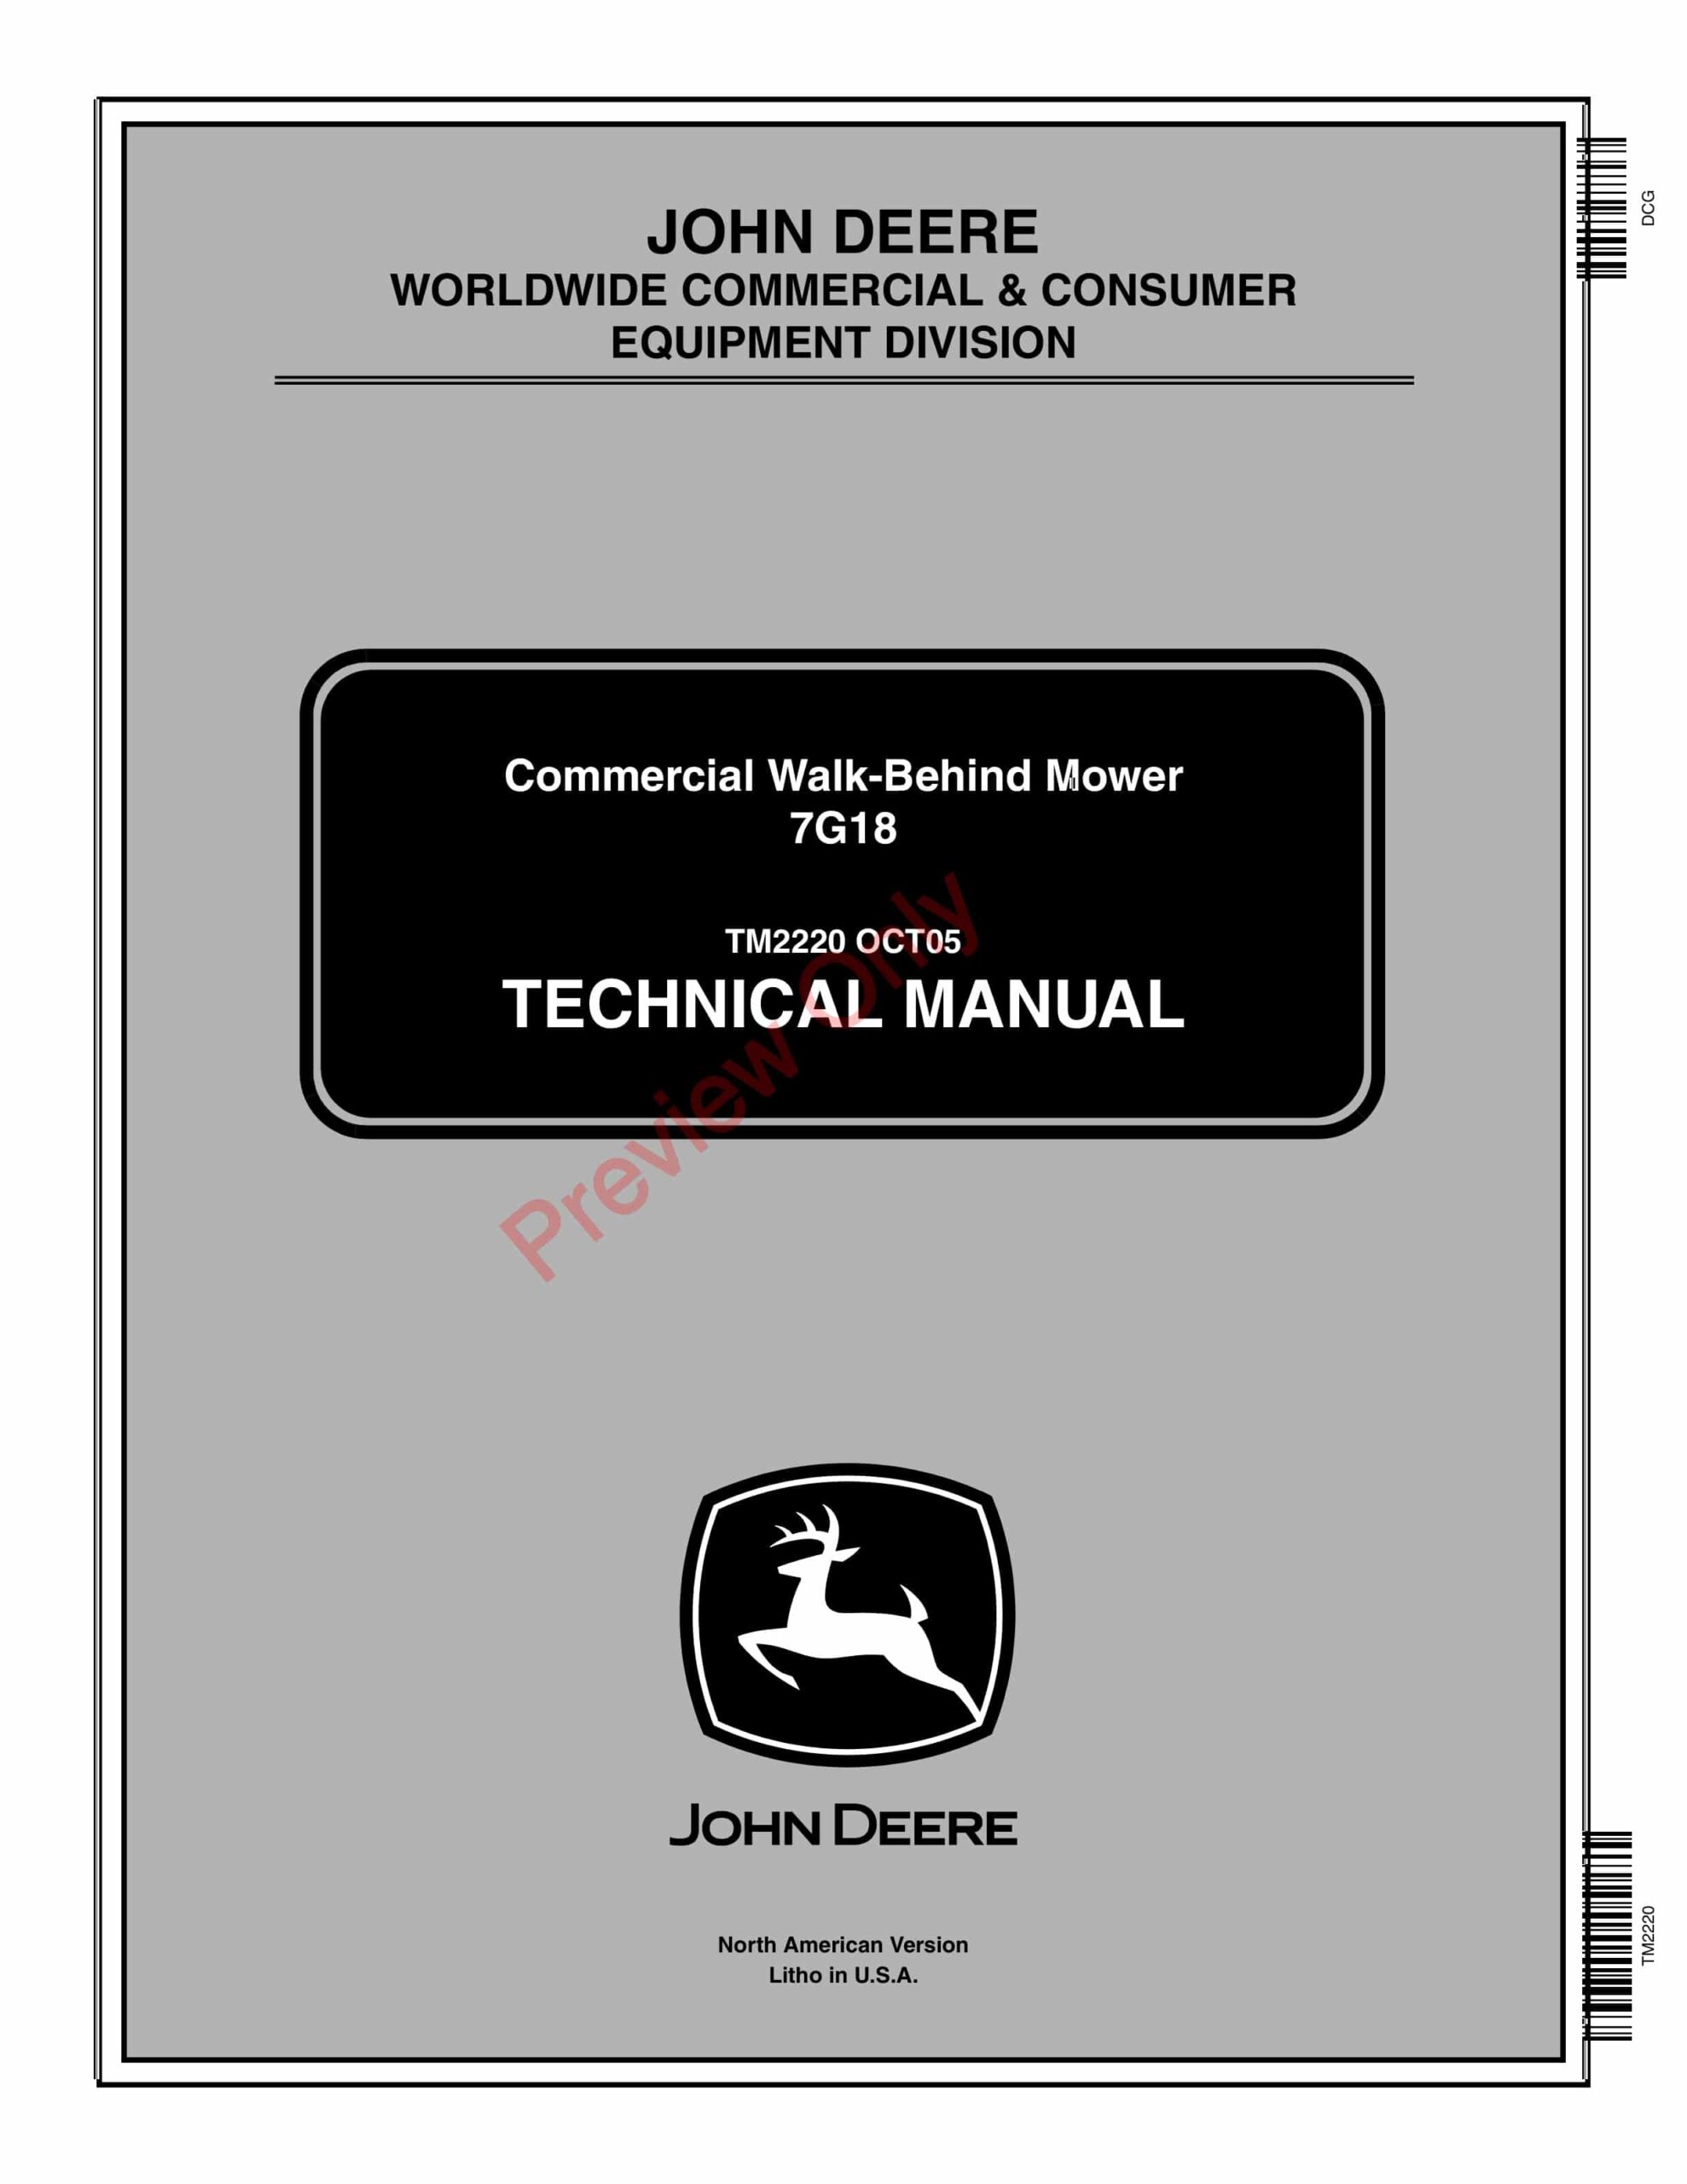 John Deere 7G18 Commercial Walk-Behind Mower Technical Manual TM2220 01OCT05-1